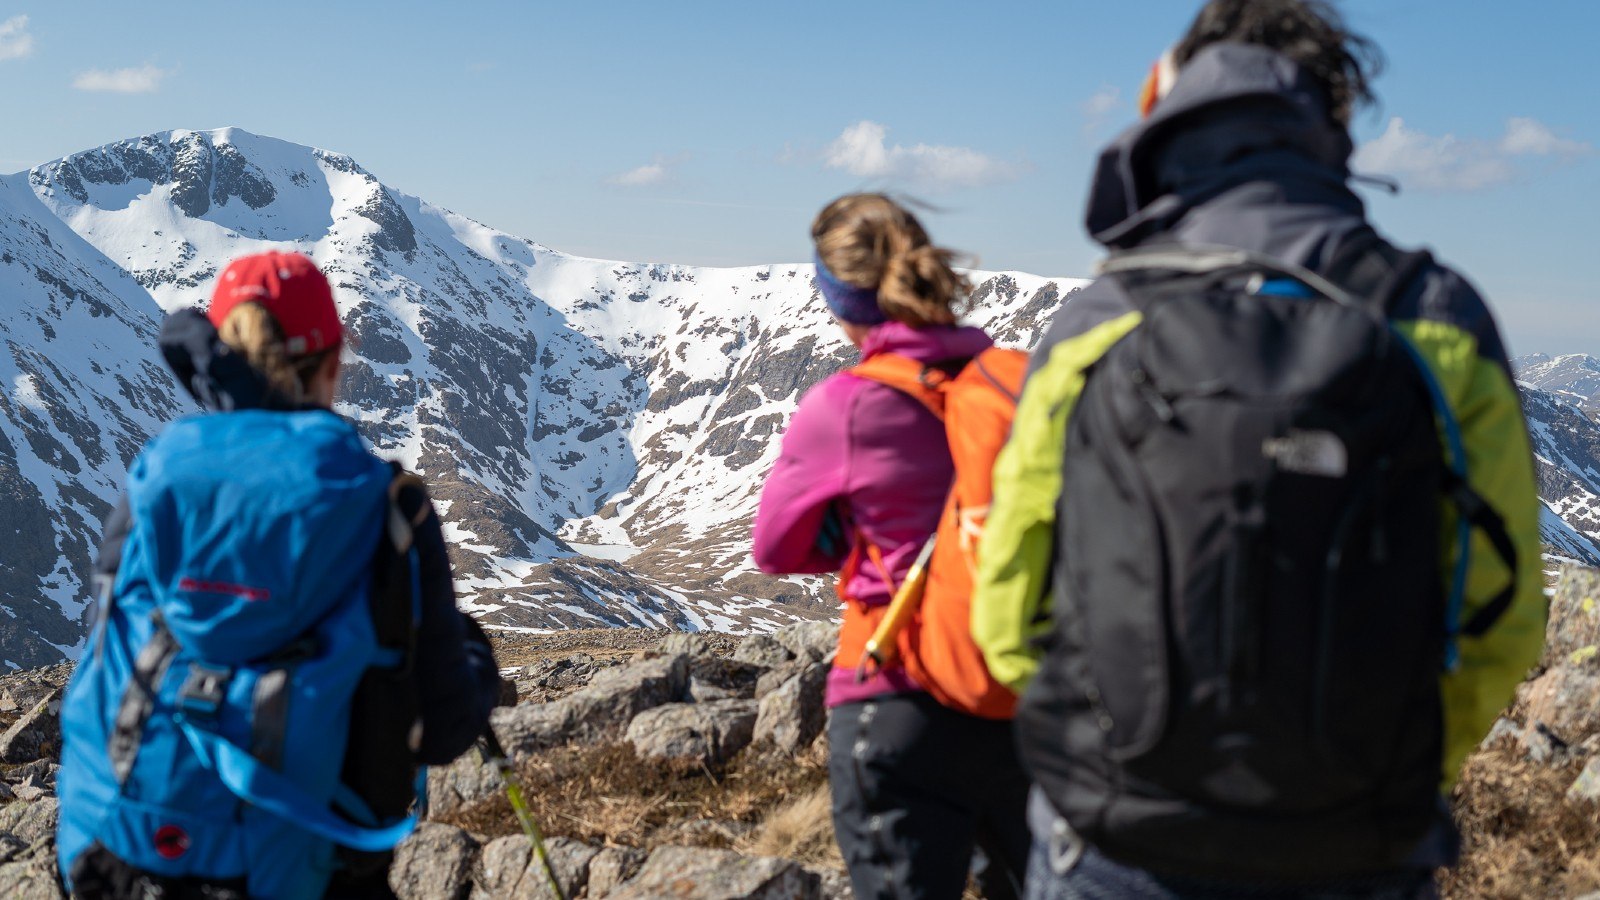 winter hillwalking courses in scotland for beginners glen coe